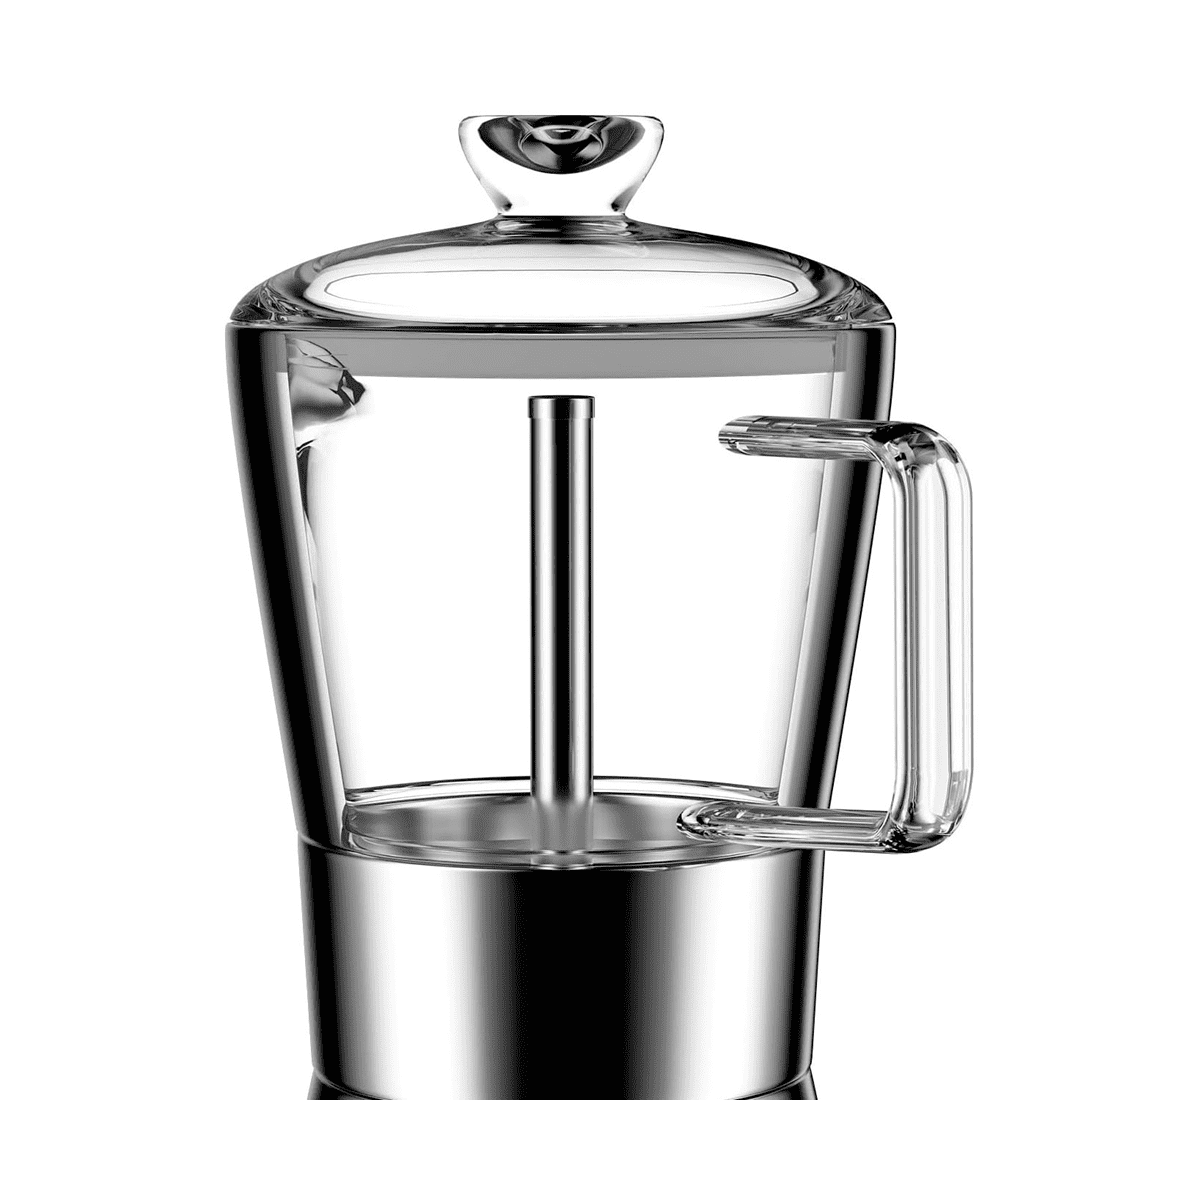  COPOTEA Moka Pot Induction Stovetop Espresso Maker,  Borosilicate Glass & Stainless Steel Moka Pot, 240 ml/8.5 oz/6 Espresso Cup  for Strong Coffee Maker, Classic Italian Coffee Maker Style: Home & Kitchen